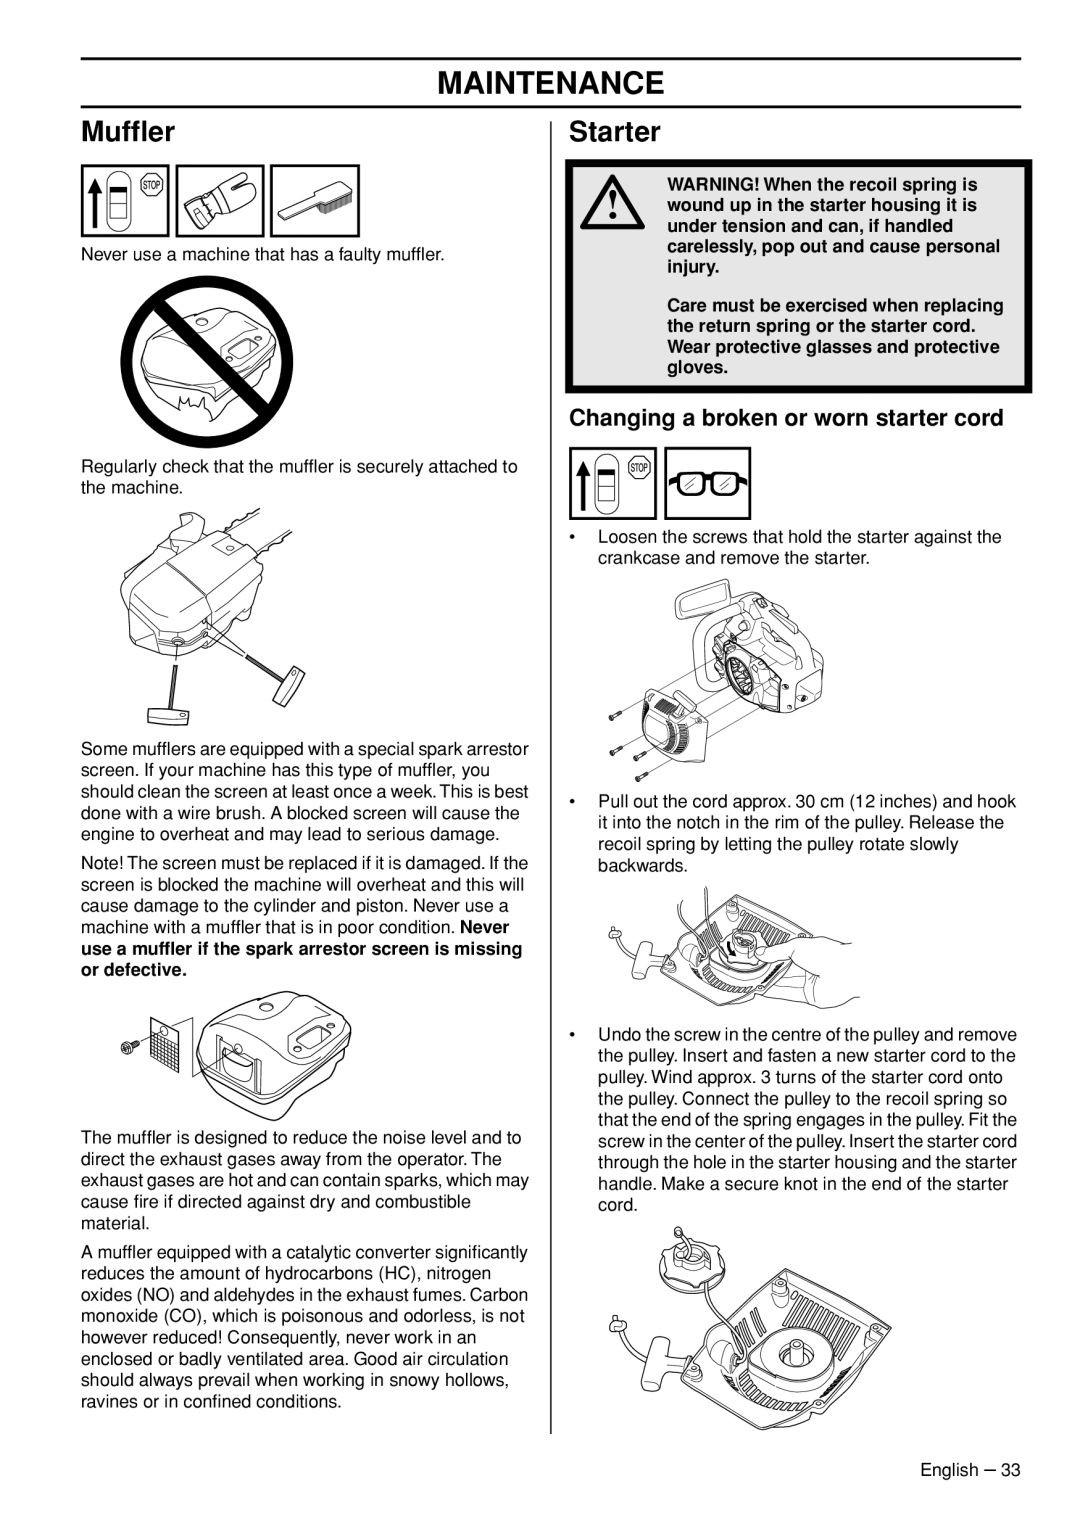 Husqvarna 1153158-95 manual Mufﬂer, Starter, Changing a broken or worn starter cord, Maintenance 